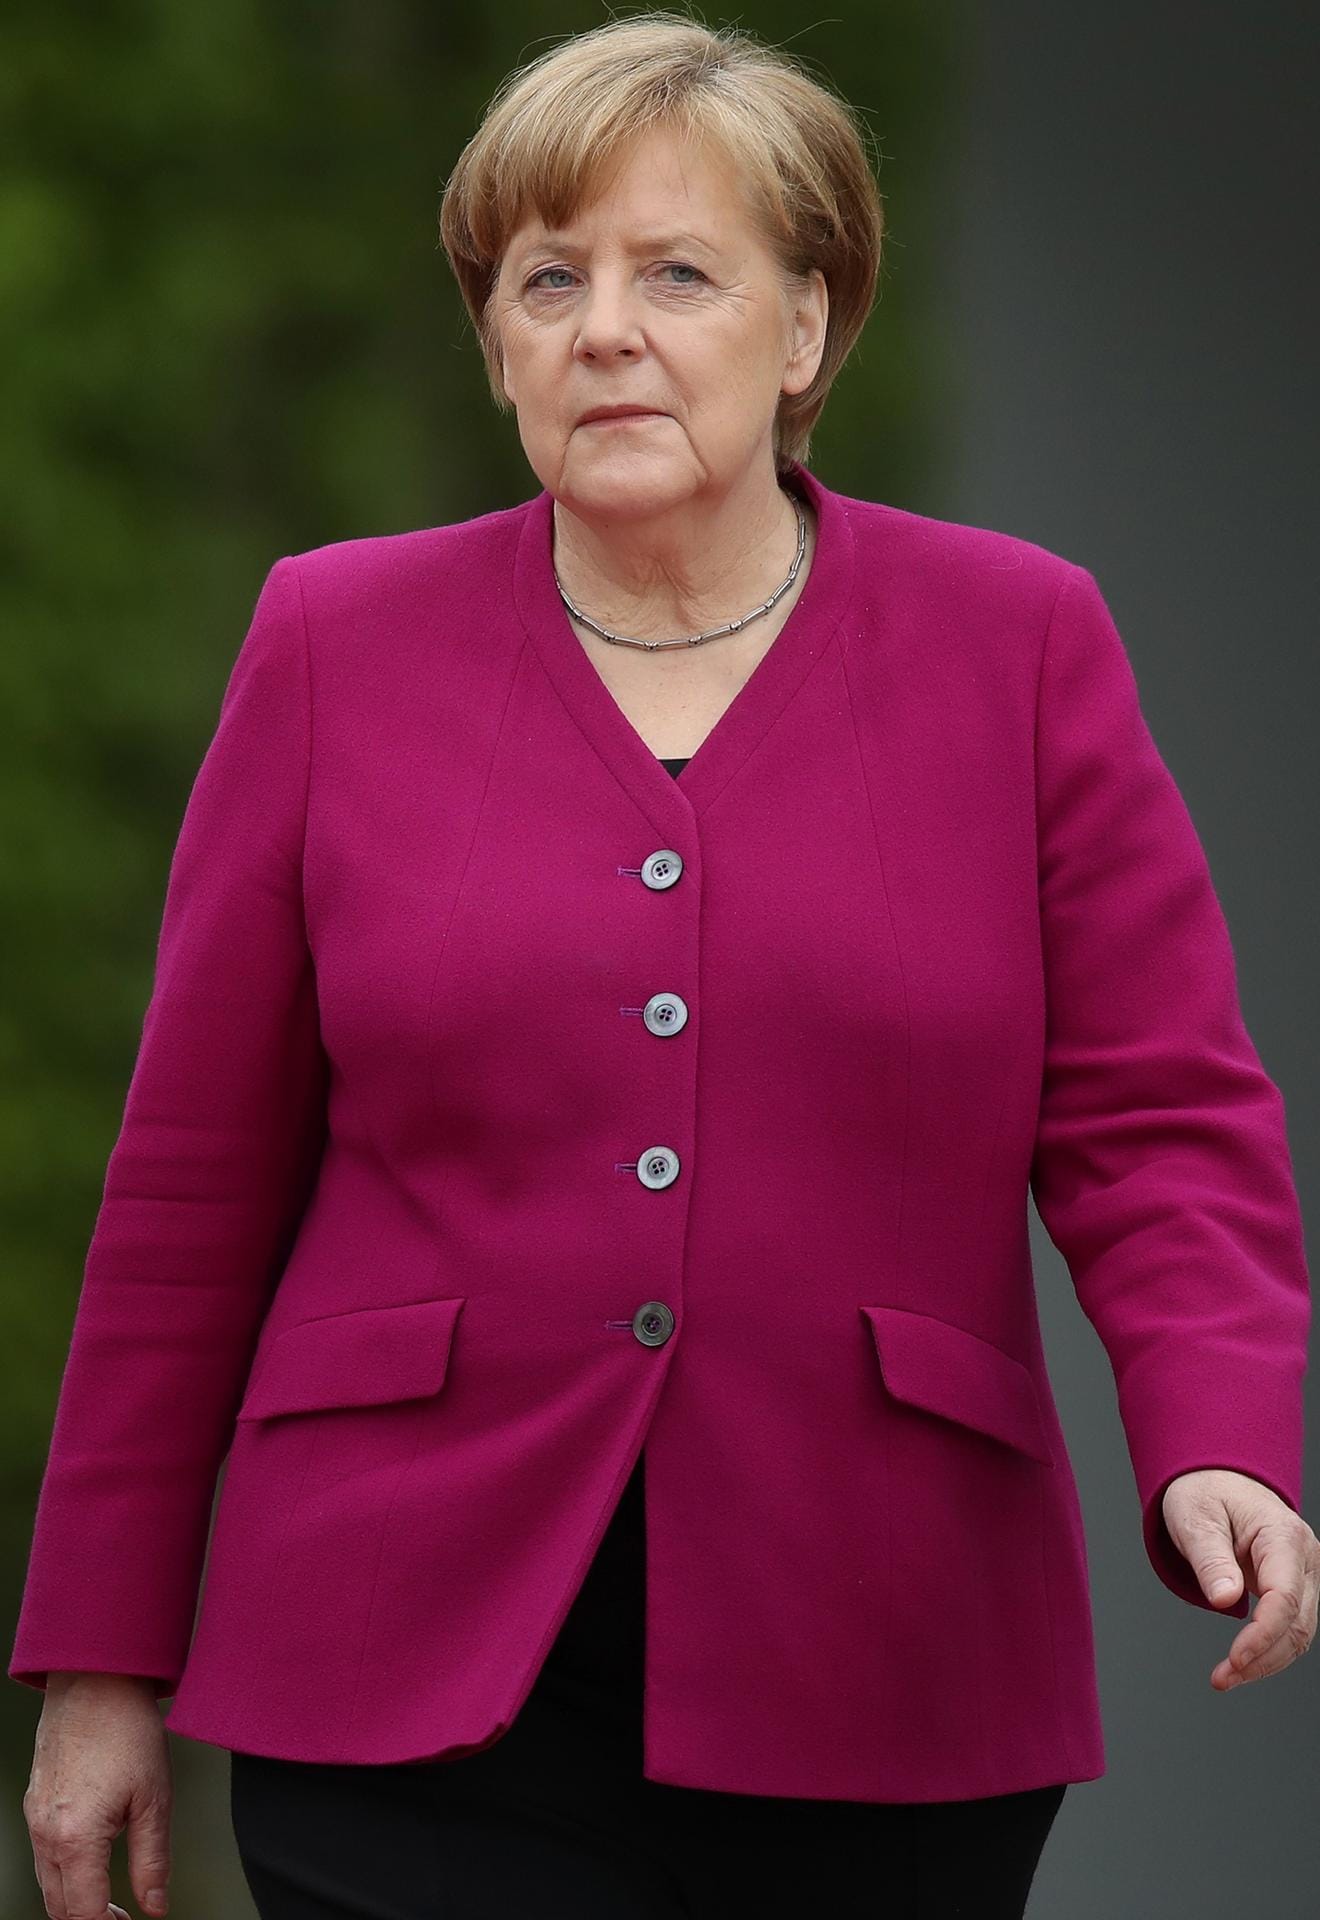 Angela Merkel in Fuchsia.